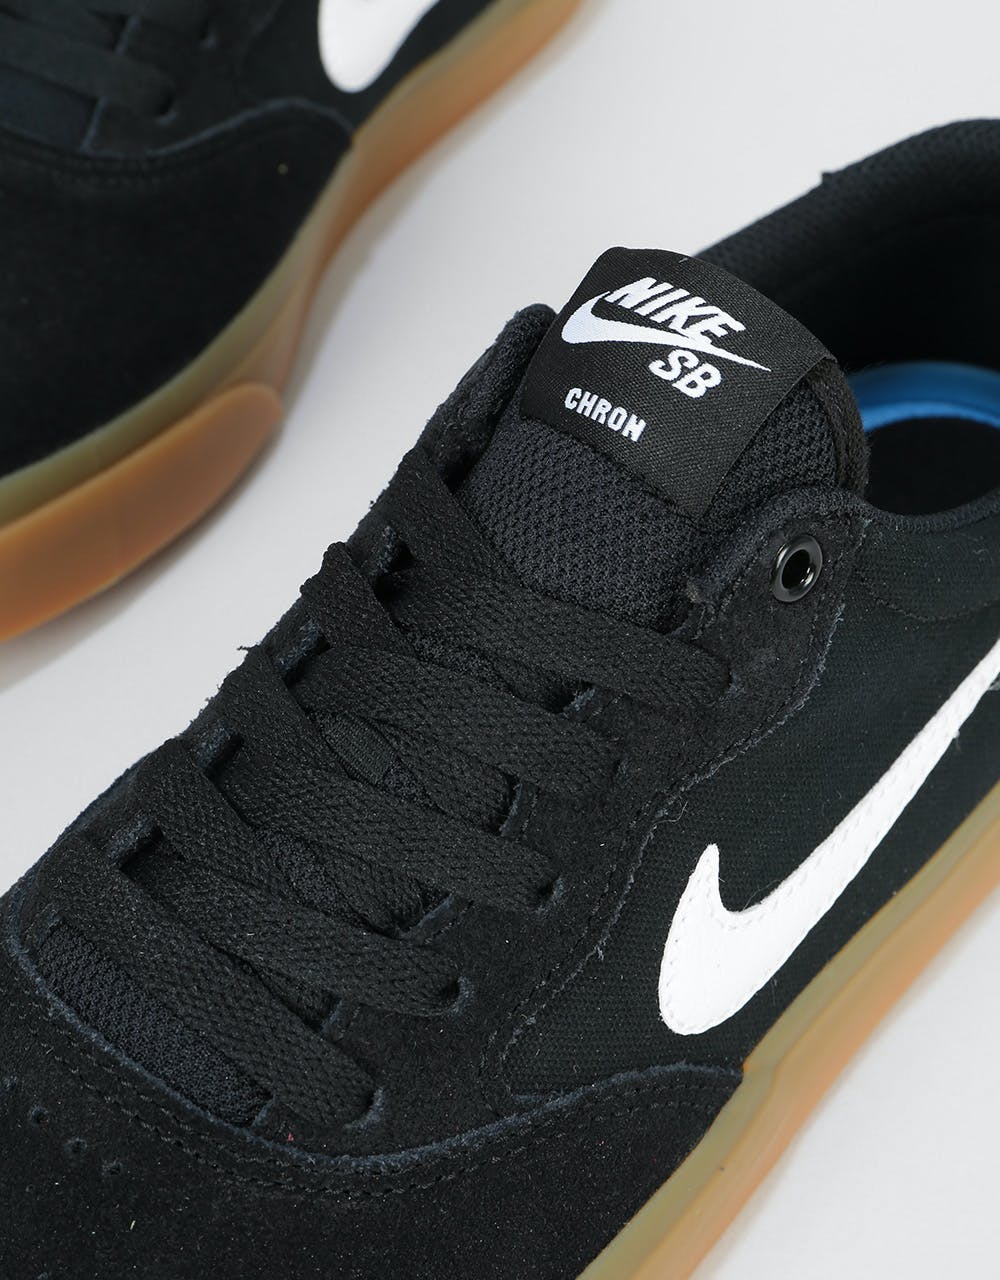 Nike SB Chron SLR Skate Shoes - Black/White-Black-Black